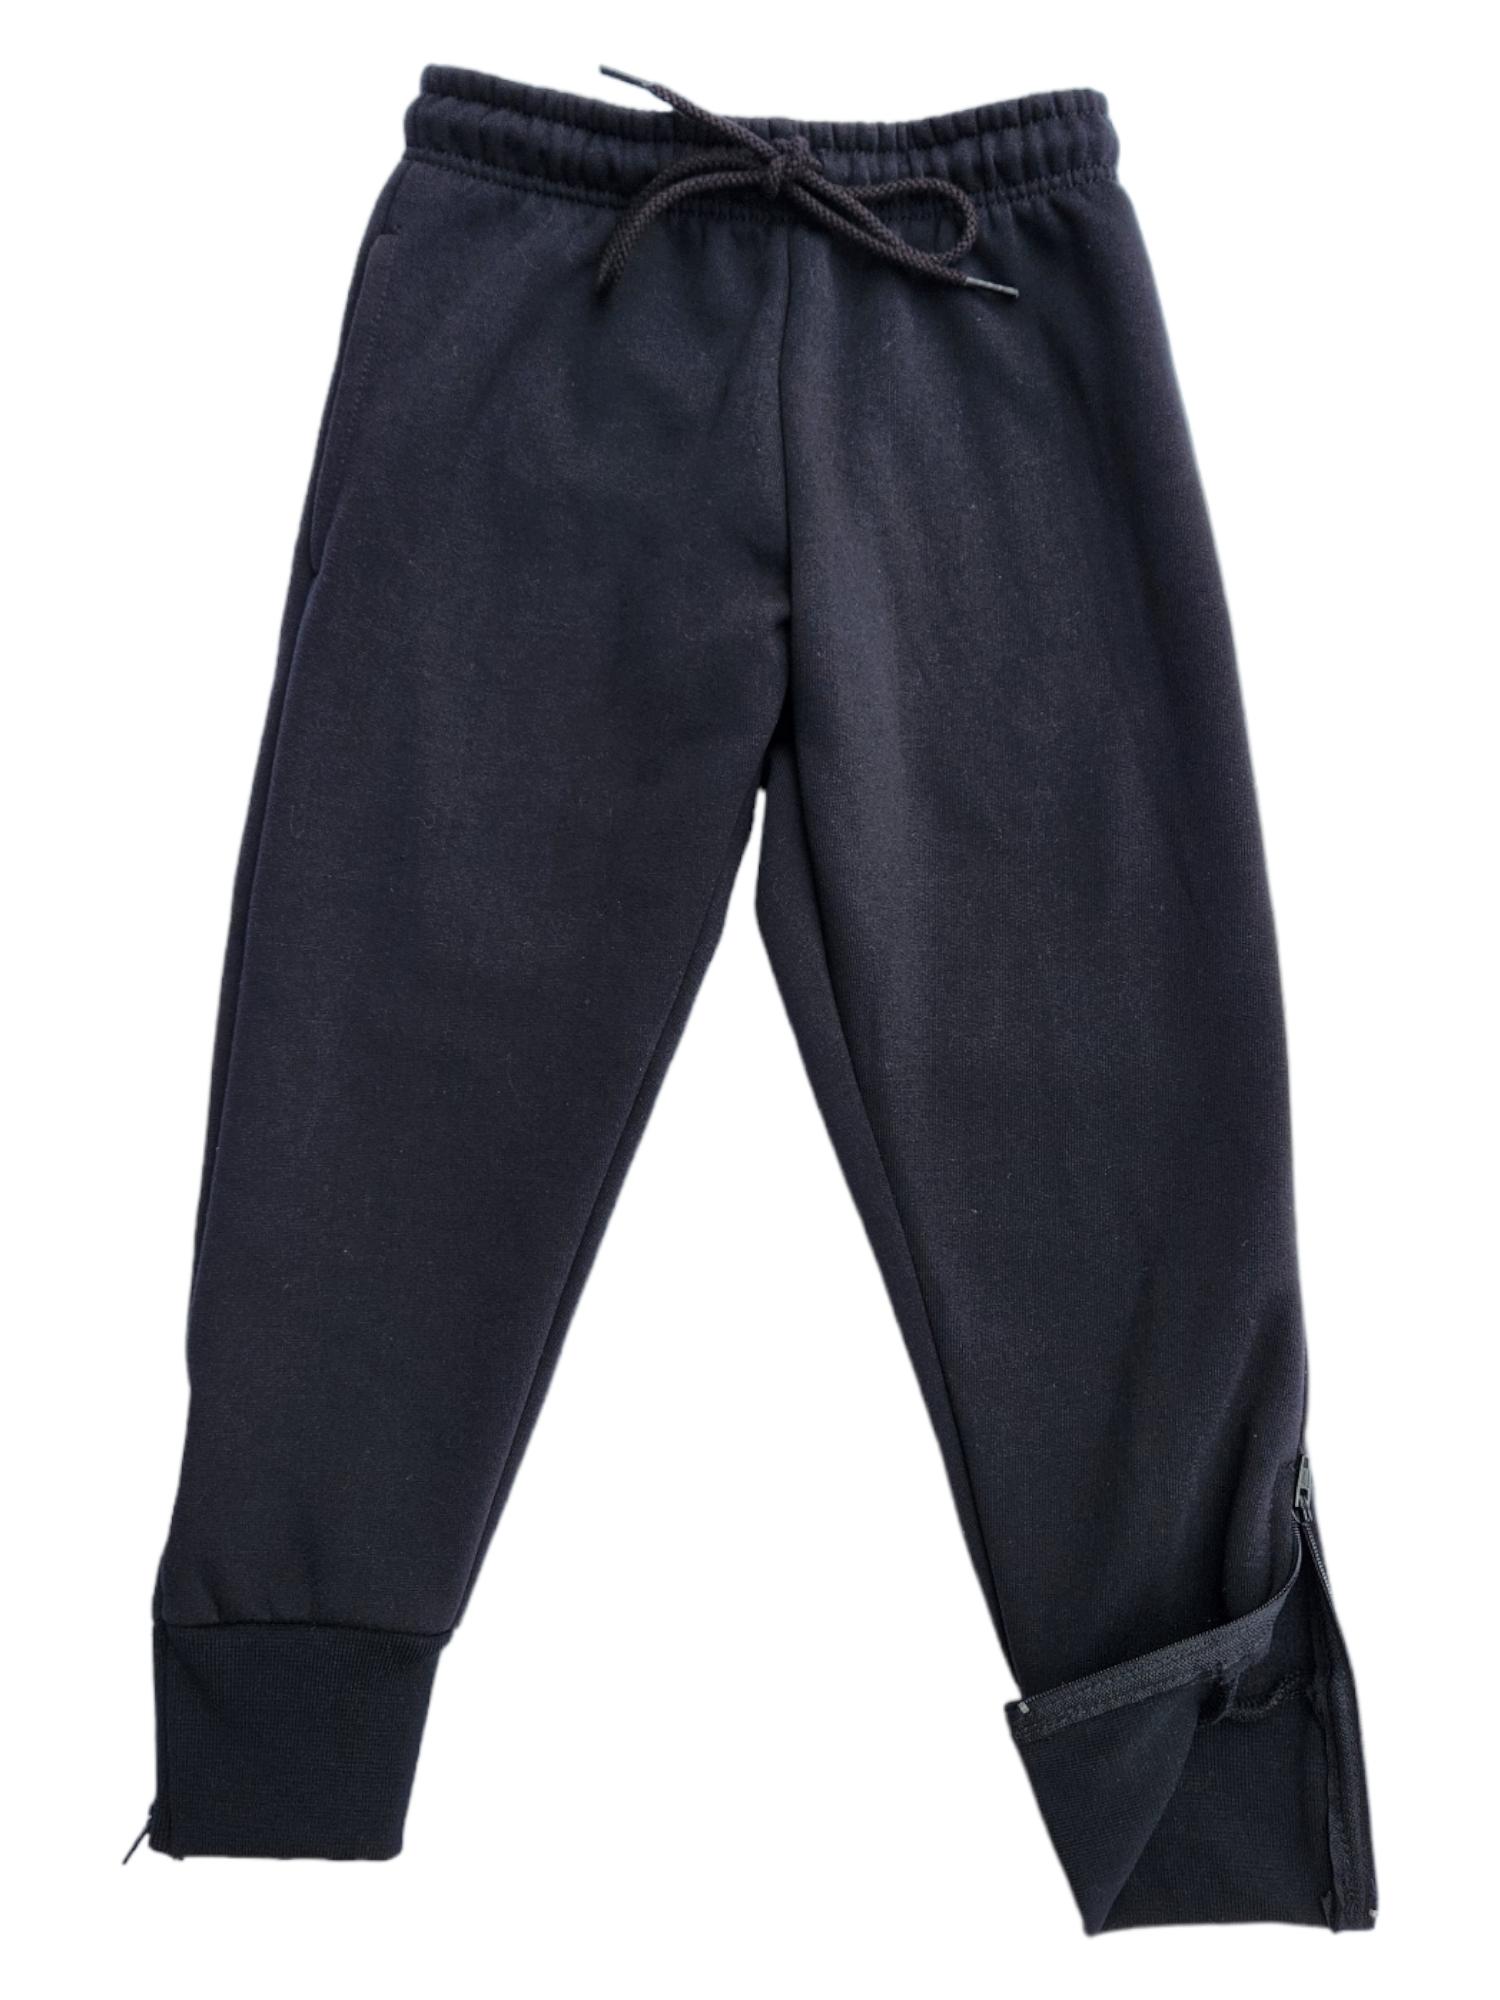 Adaptive black track pants adjustable drawstring waist and zip at ankle